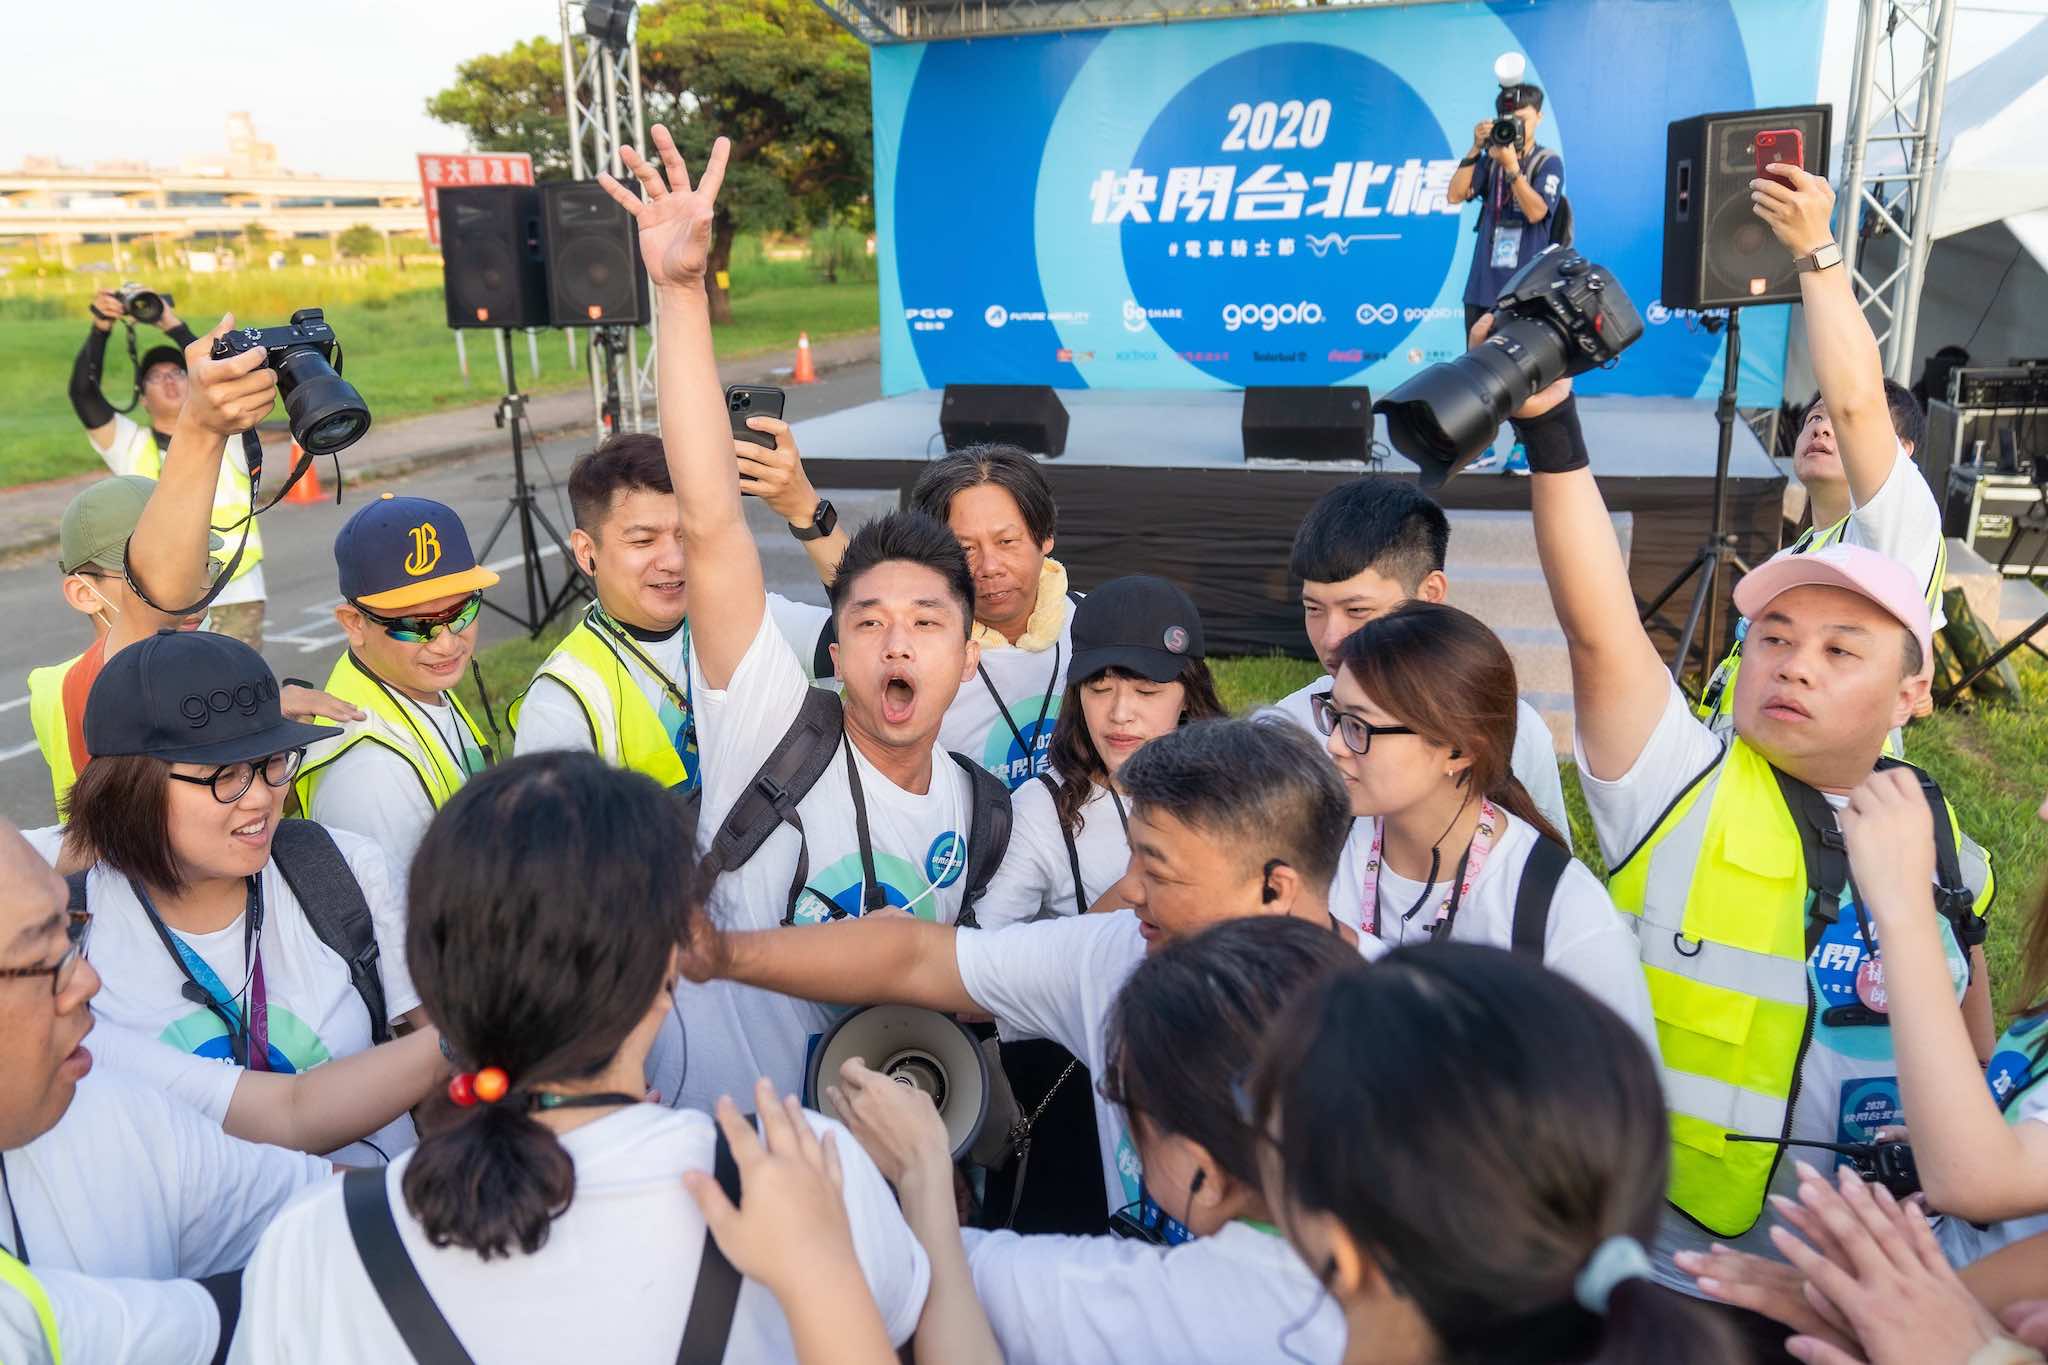 Gogoro 快閃台北橋活動，每年都有為數眾多的志工團參與籌辦，今年的志工團將近 100 人，再創歷史新高。